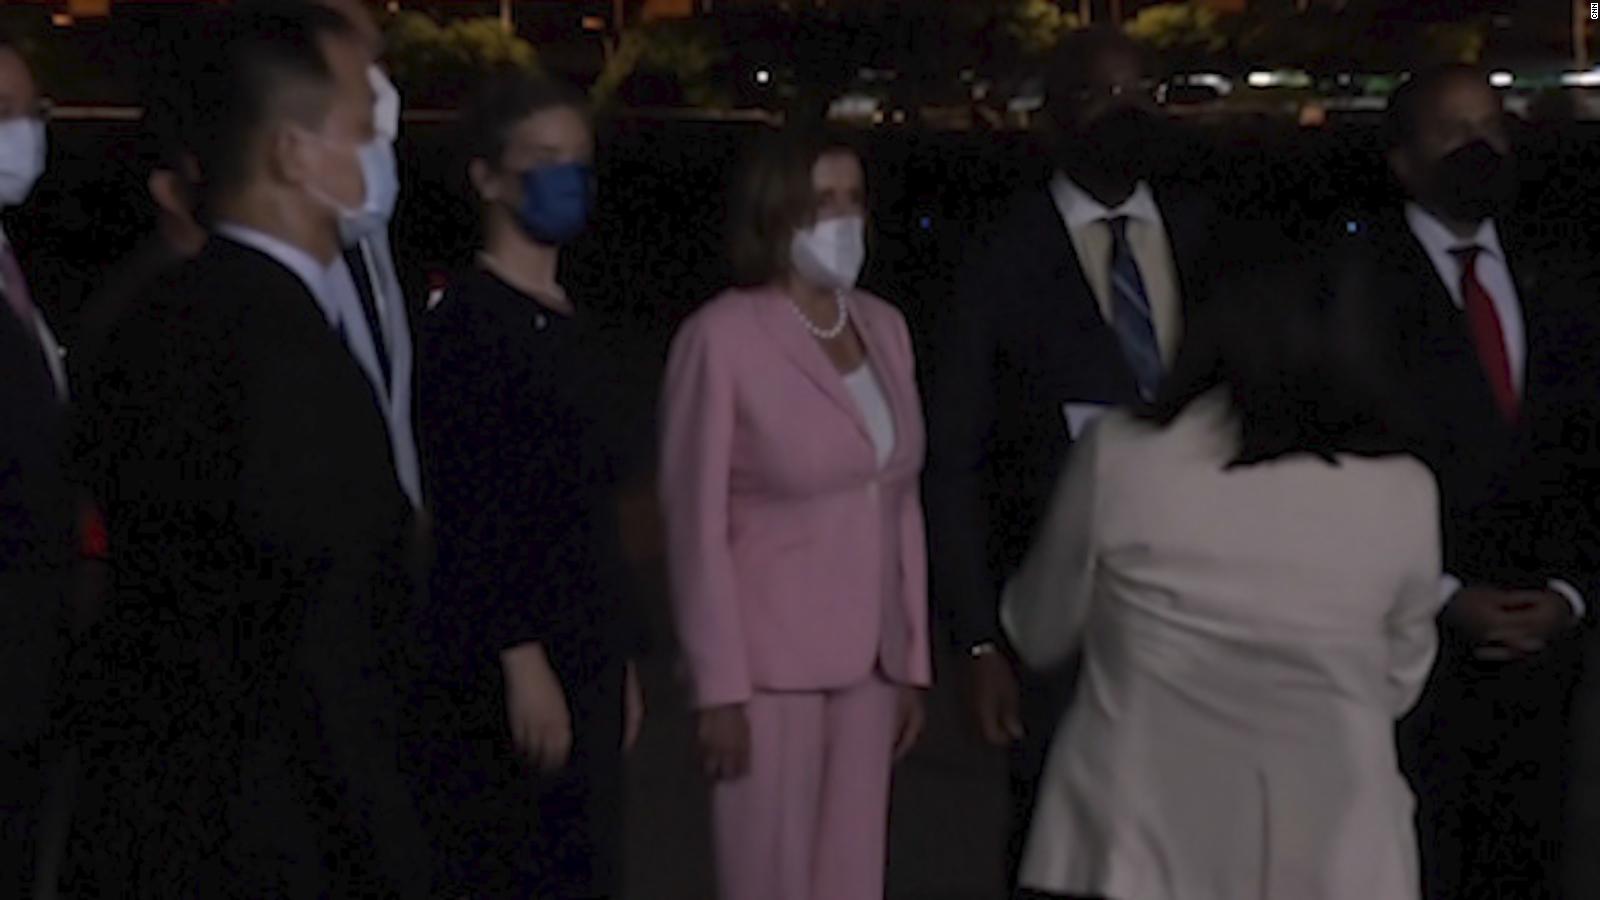 US House Speaker Nancy Pelosi Lands In Taiwan Amid Threats Of Chinese Retaliation